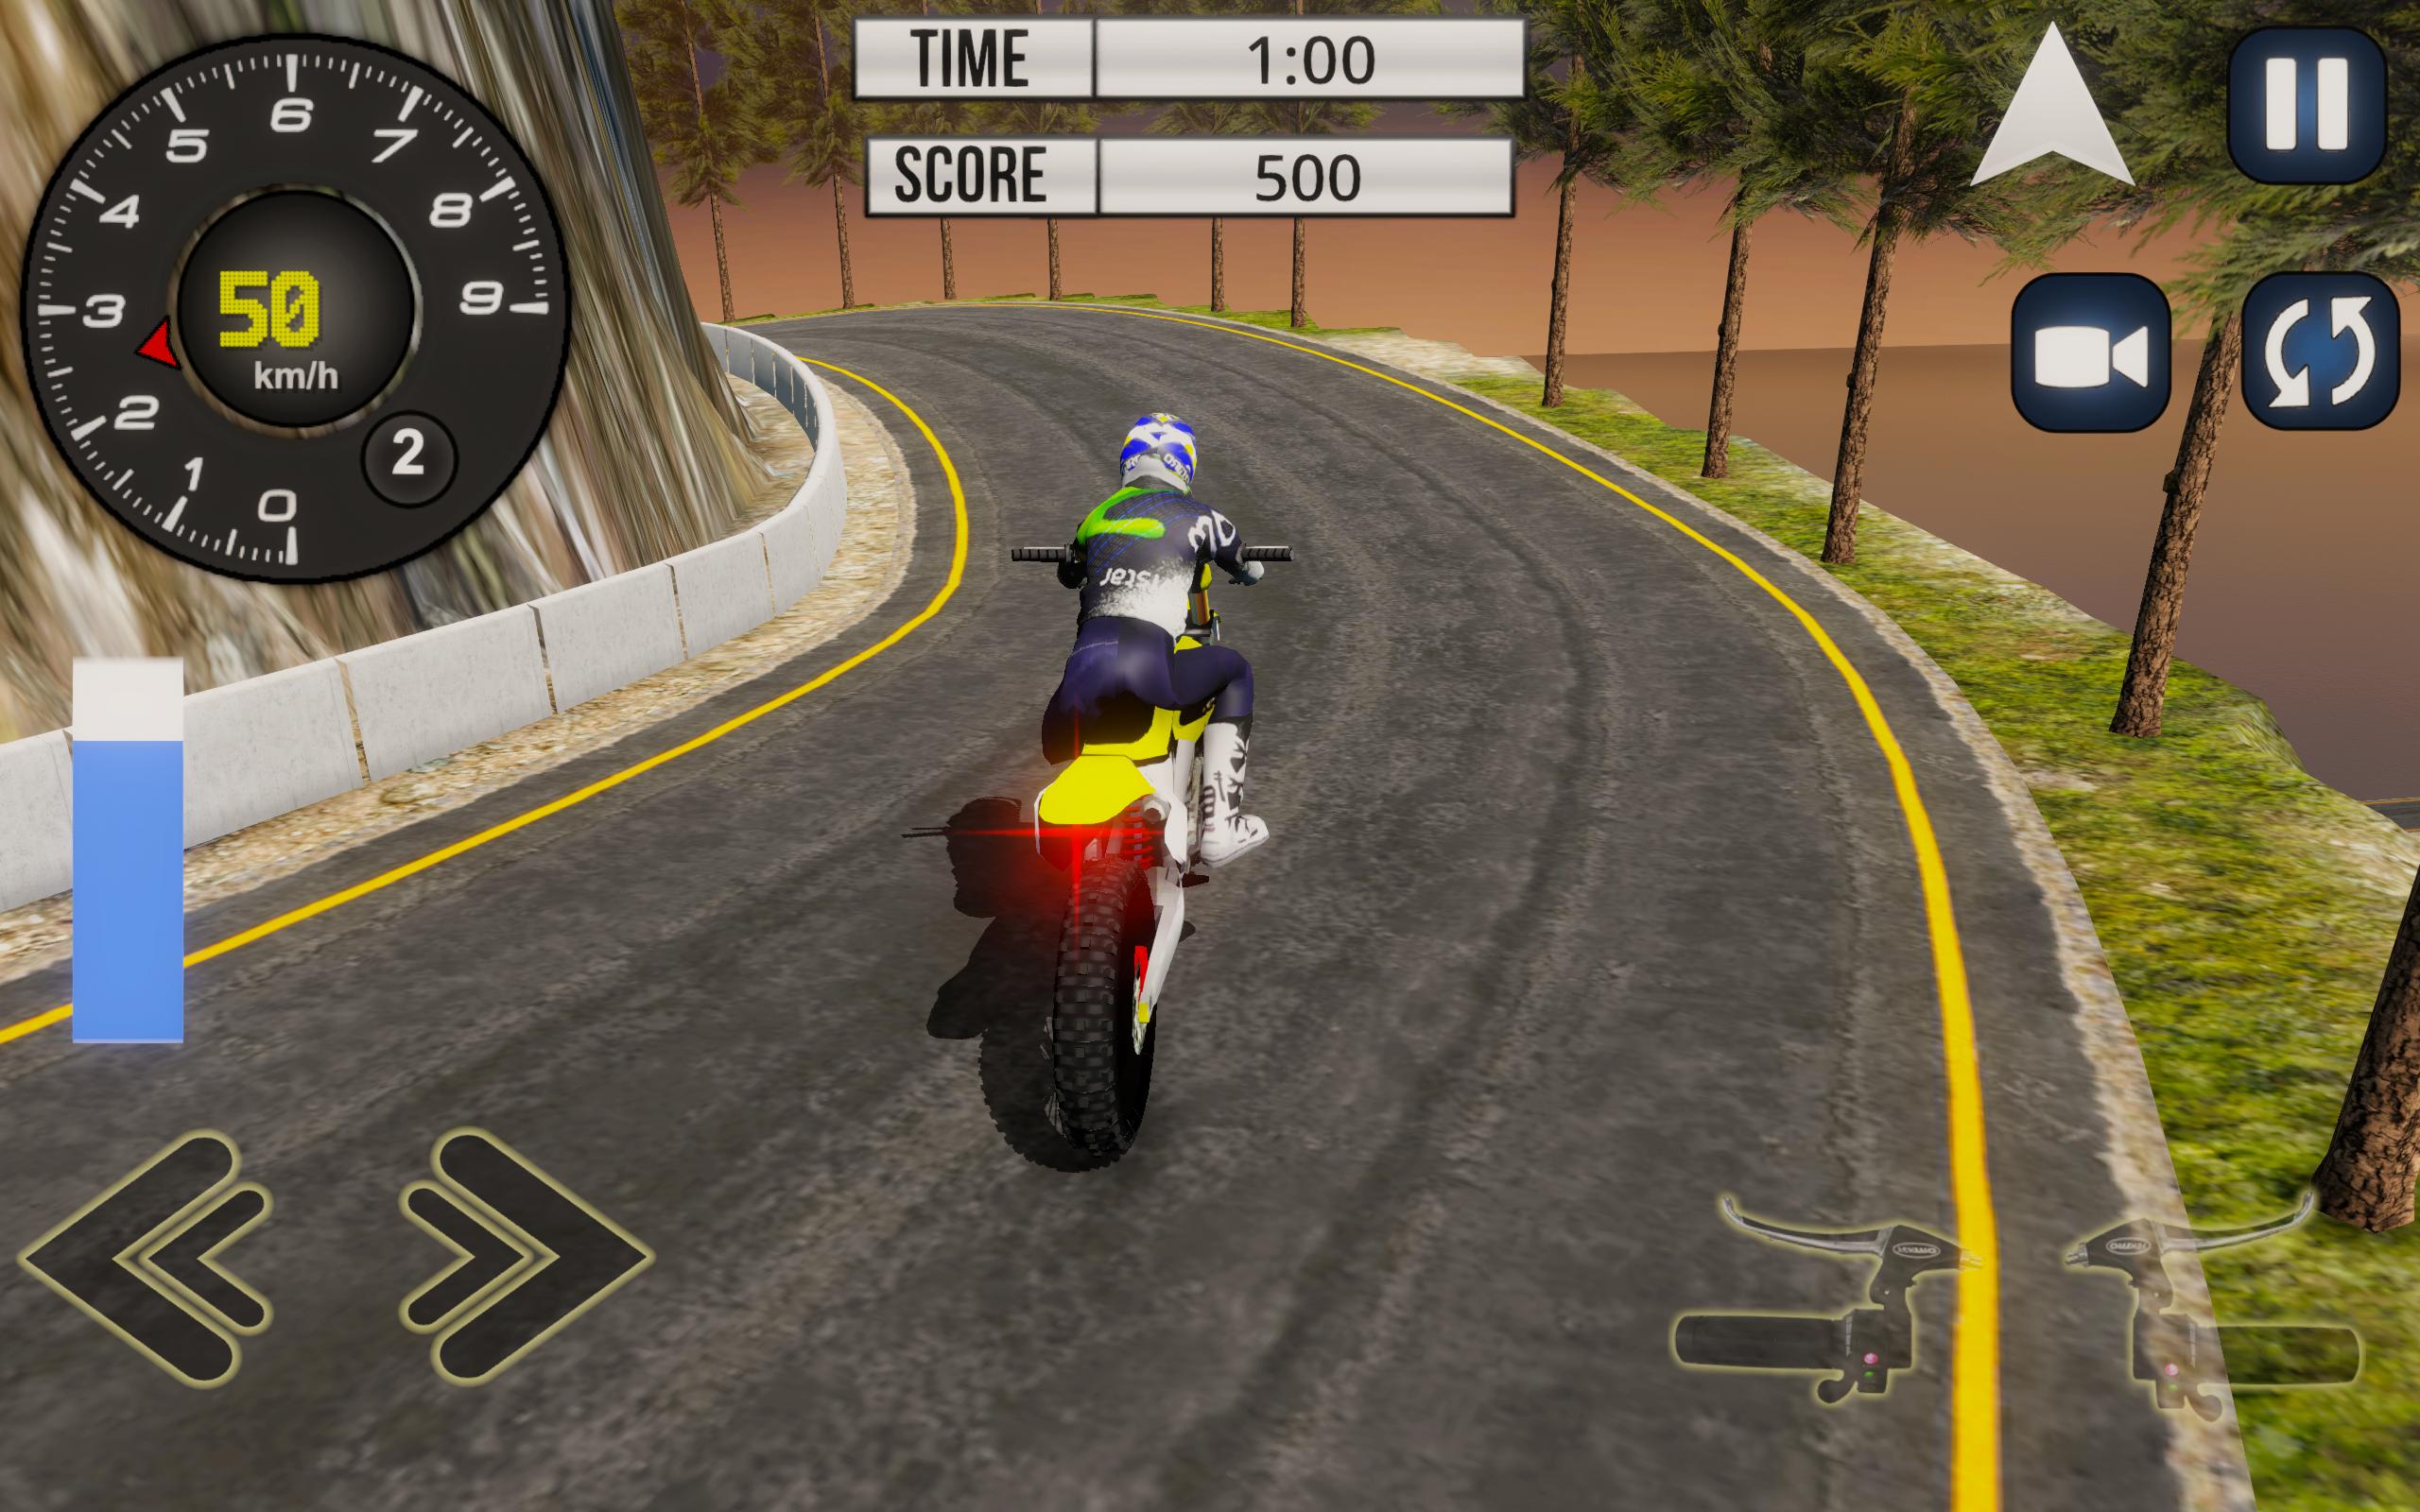 Motorcycle Racer 3D-Offroad Bike Racing Games 2018 APK for Android Download - Screen 5.jpg?fakeurl=1&type=